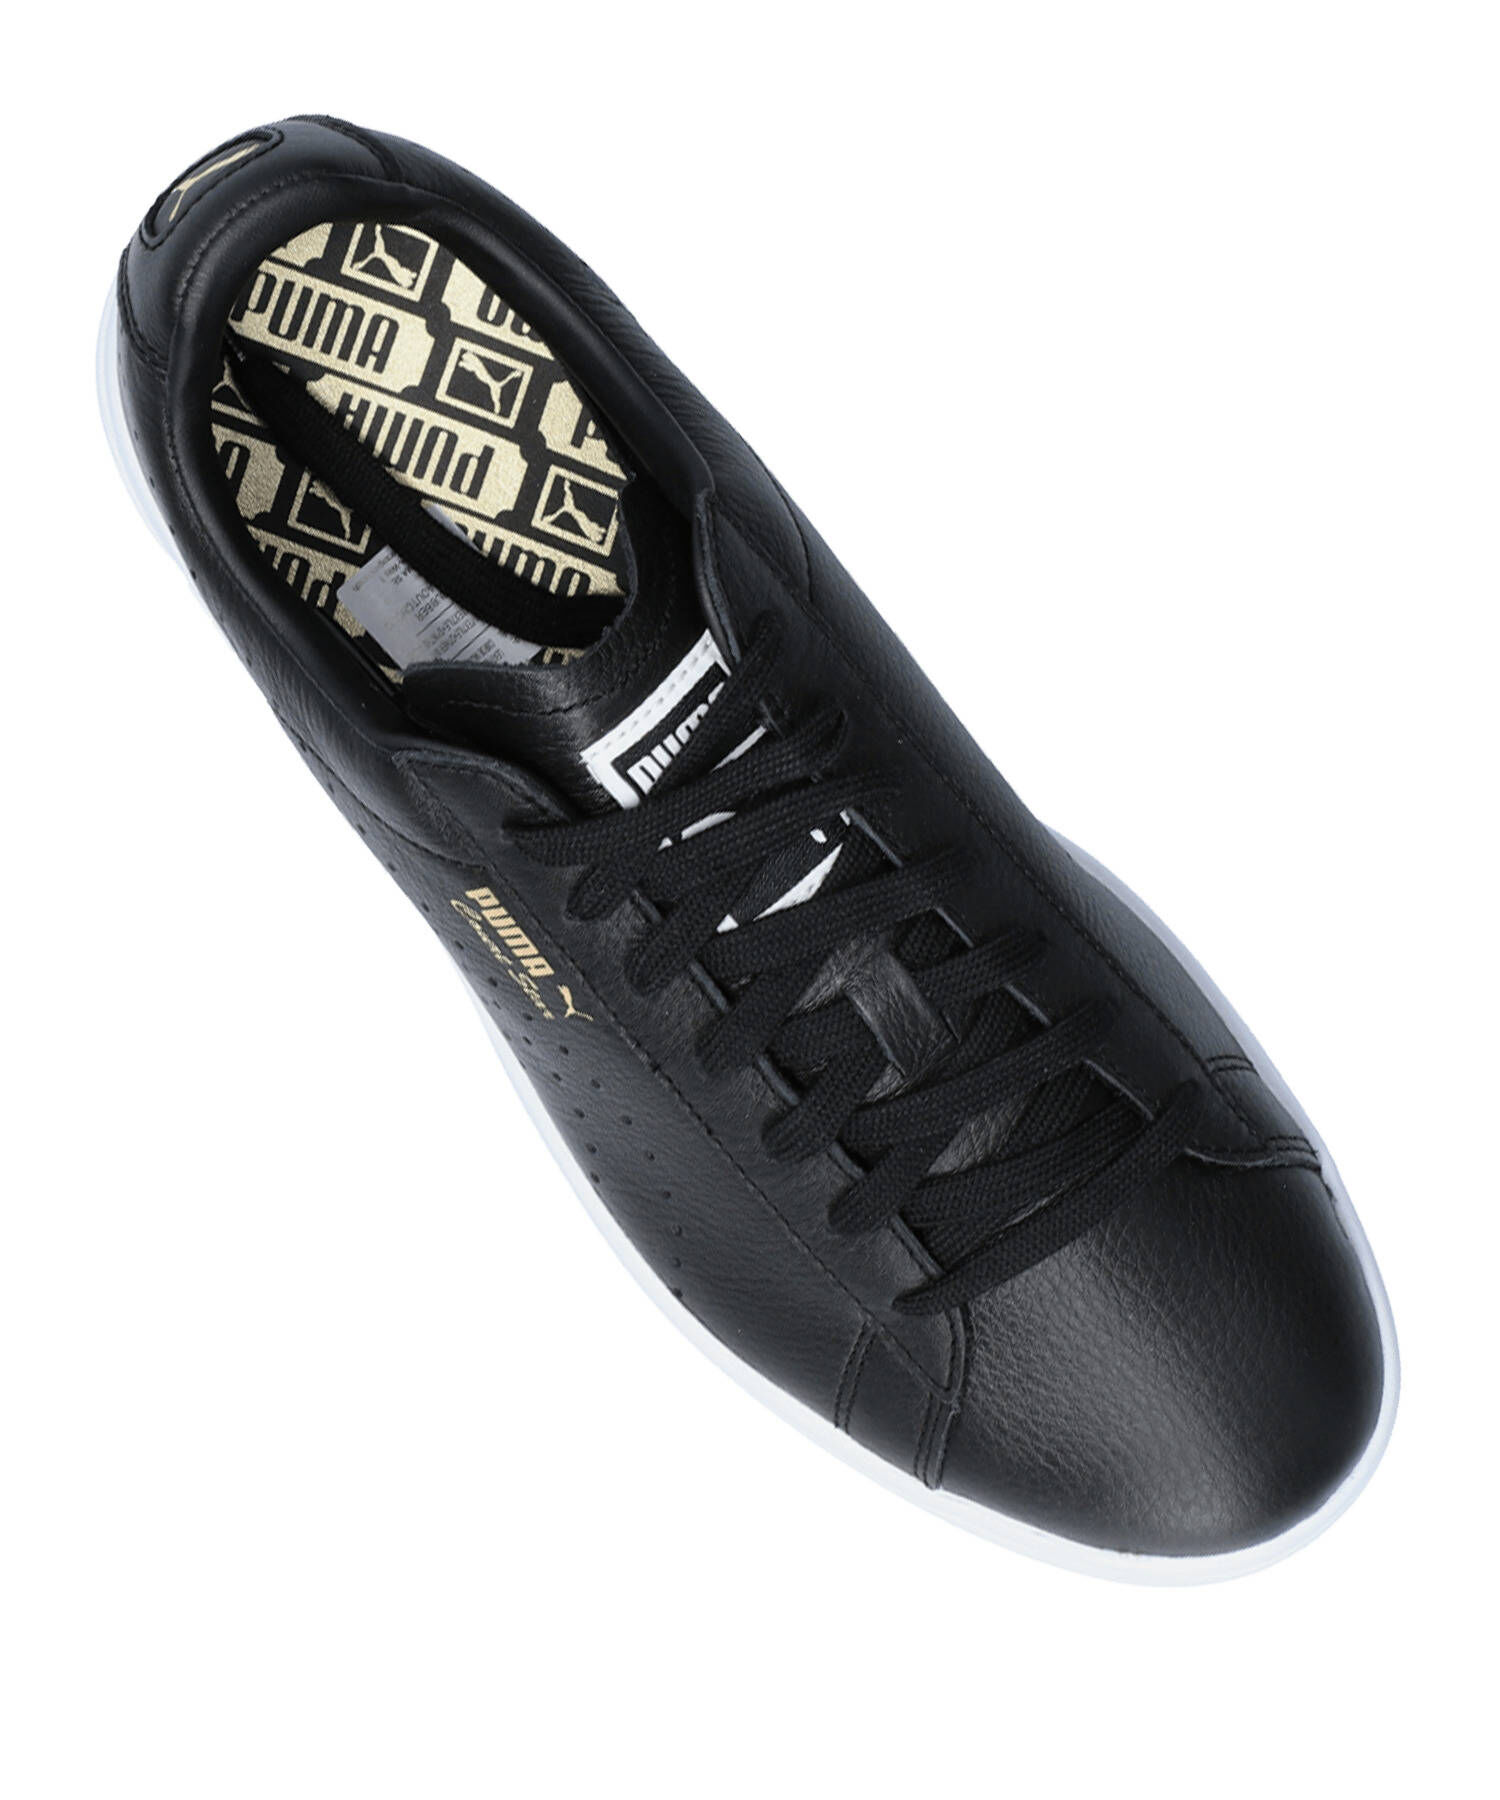 Lifestyle engelhorn Schuhe Star Sneakers Herren NM - Sneaker Court - | Puma Herren kaufen